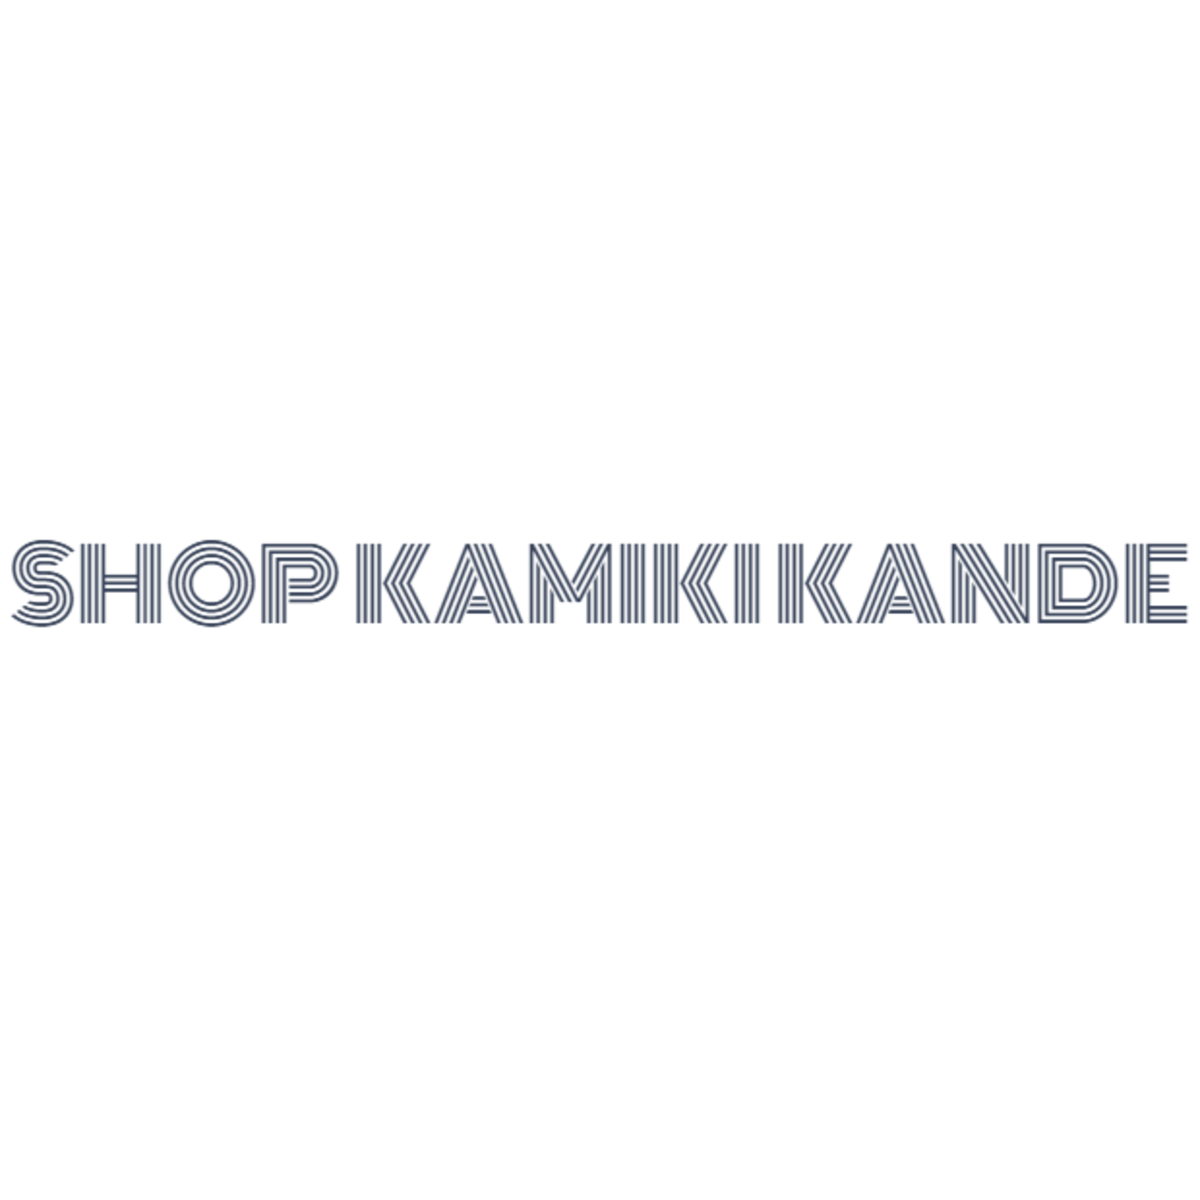 Ready go to ... https://kamikikande.thebase.in/kamiki.onepiece@gmail.comtwitterDM%E2%80%BB [ SHOP KAMIKI KANDE powered by BASE]